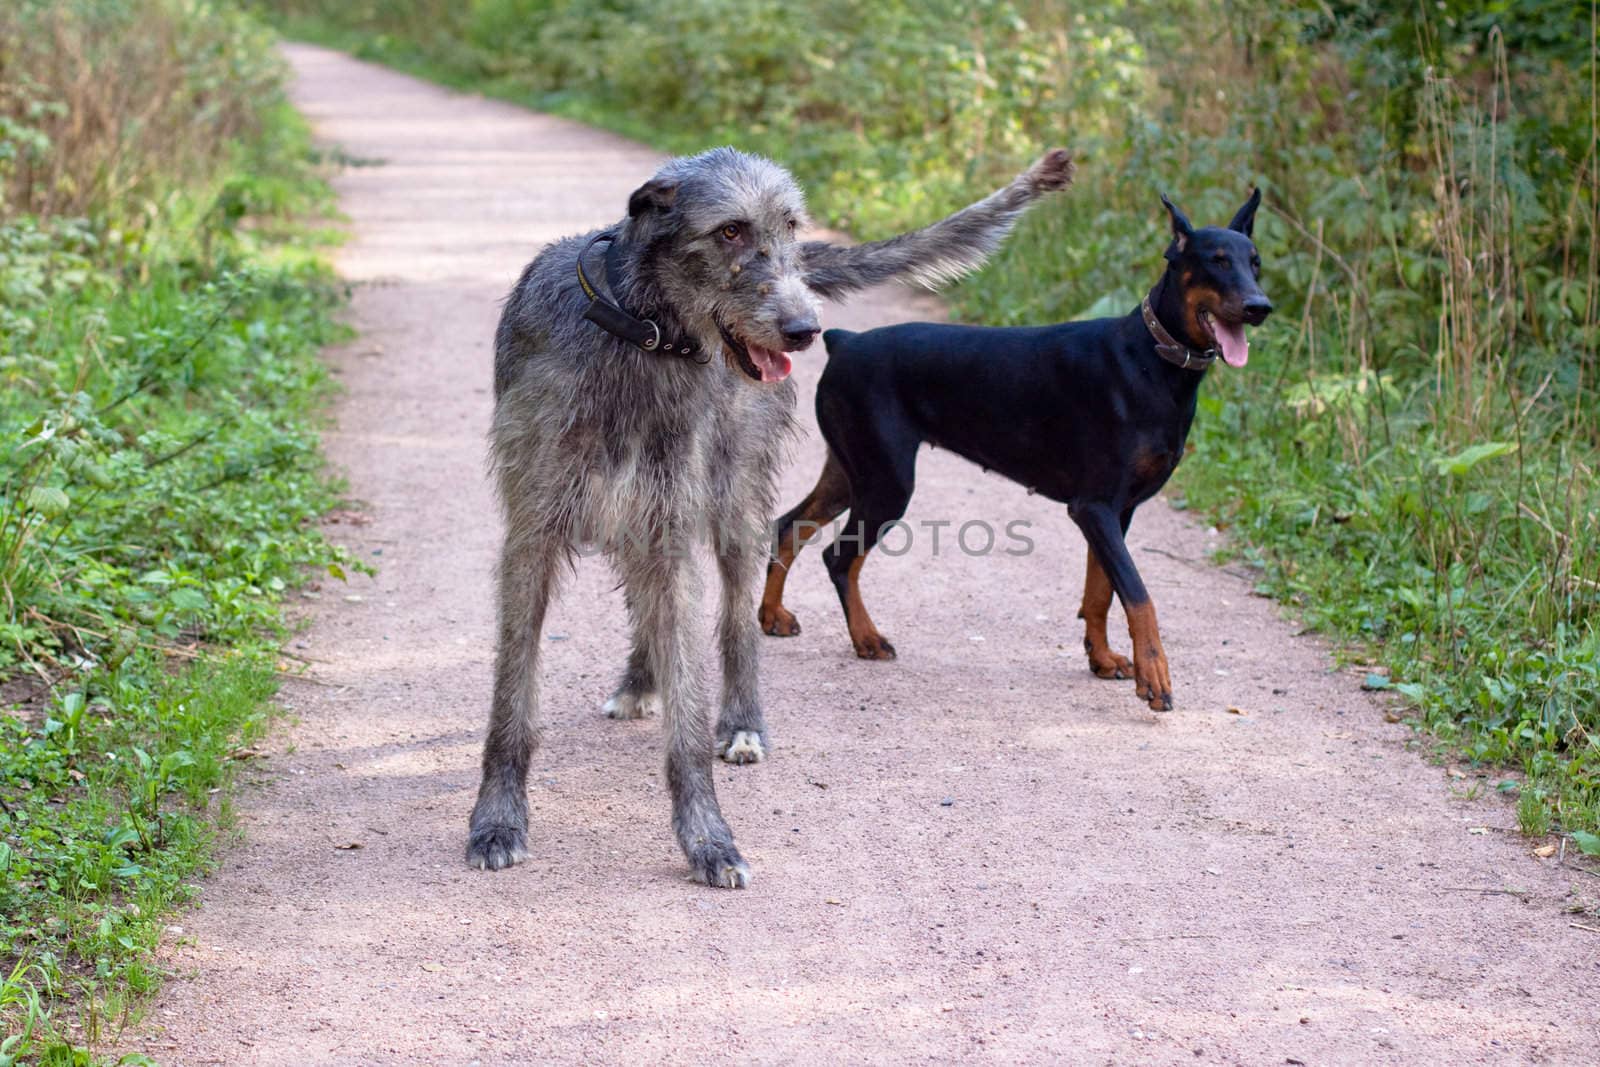 An irirsh wolfhound and a dobermann in a summer park
